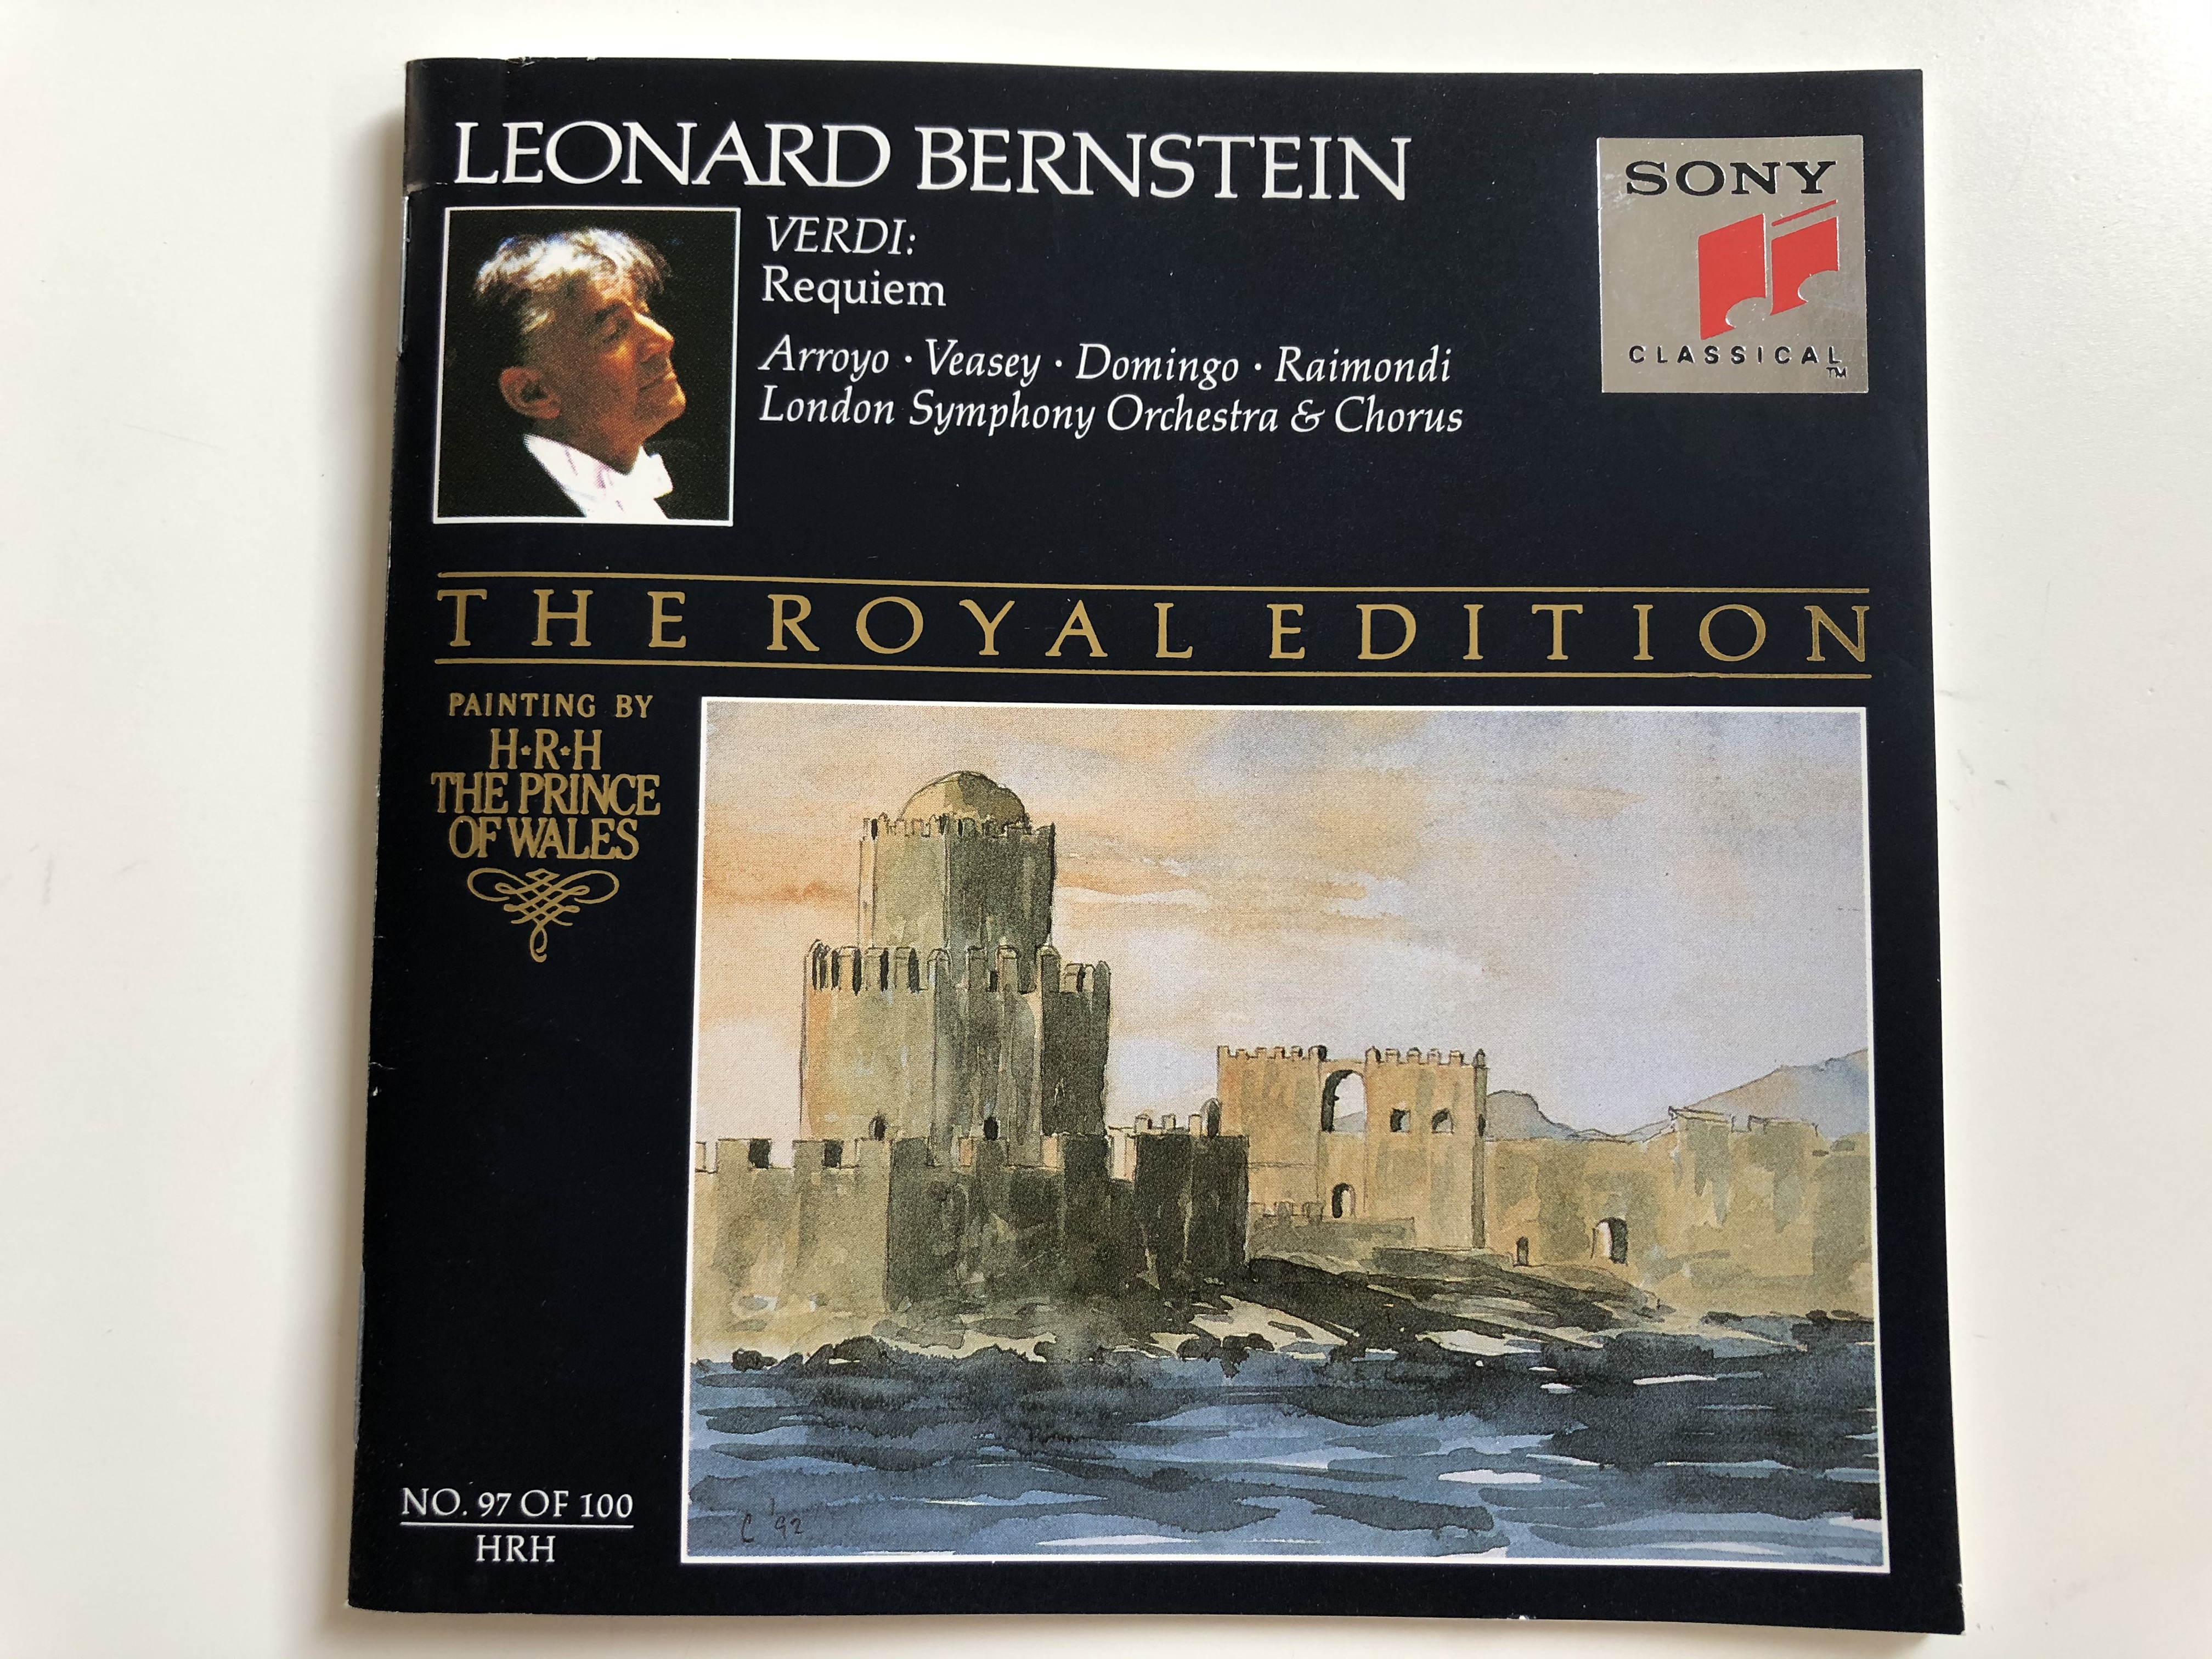 leonard-bernstein-verdi-requiem-arroyo-veasey-domingo-raimondi-london-symphony-orchestra-chorus-the-royal-edition-painting-by-h.r.h.-the-prince-of-wales-no.97-of-100-sony-classical-2-5-.jpg